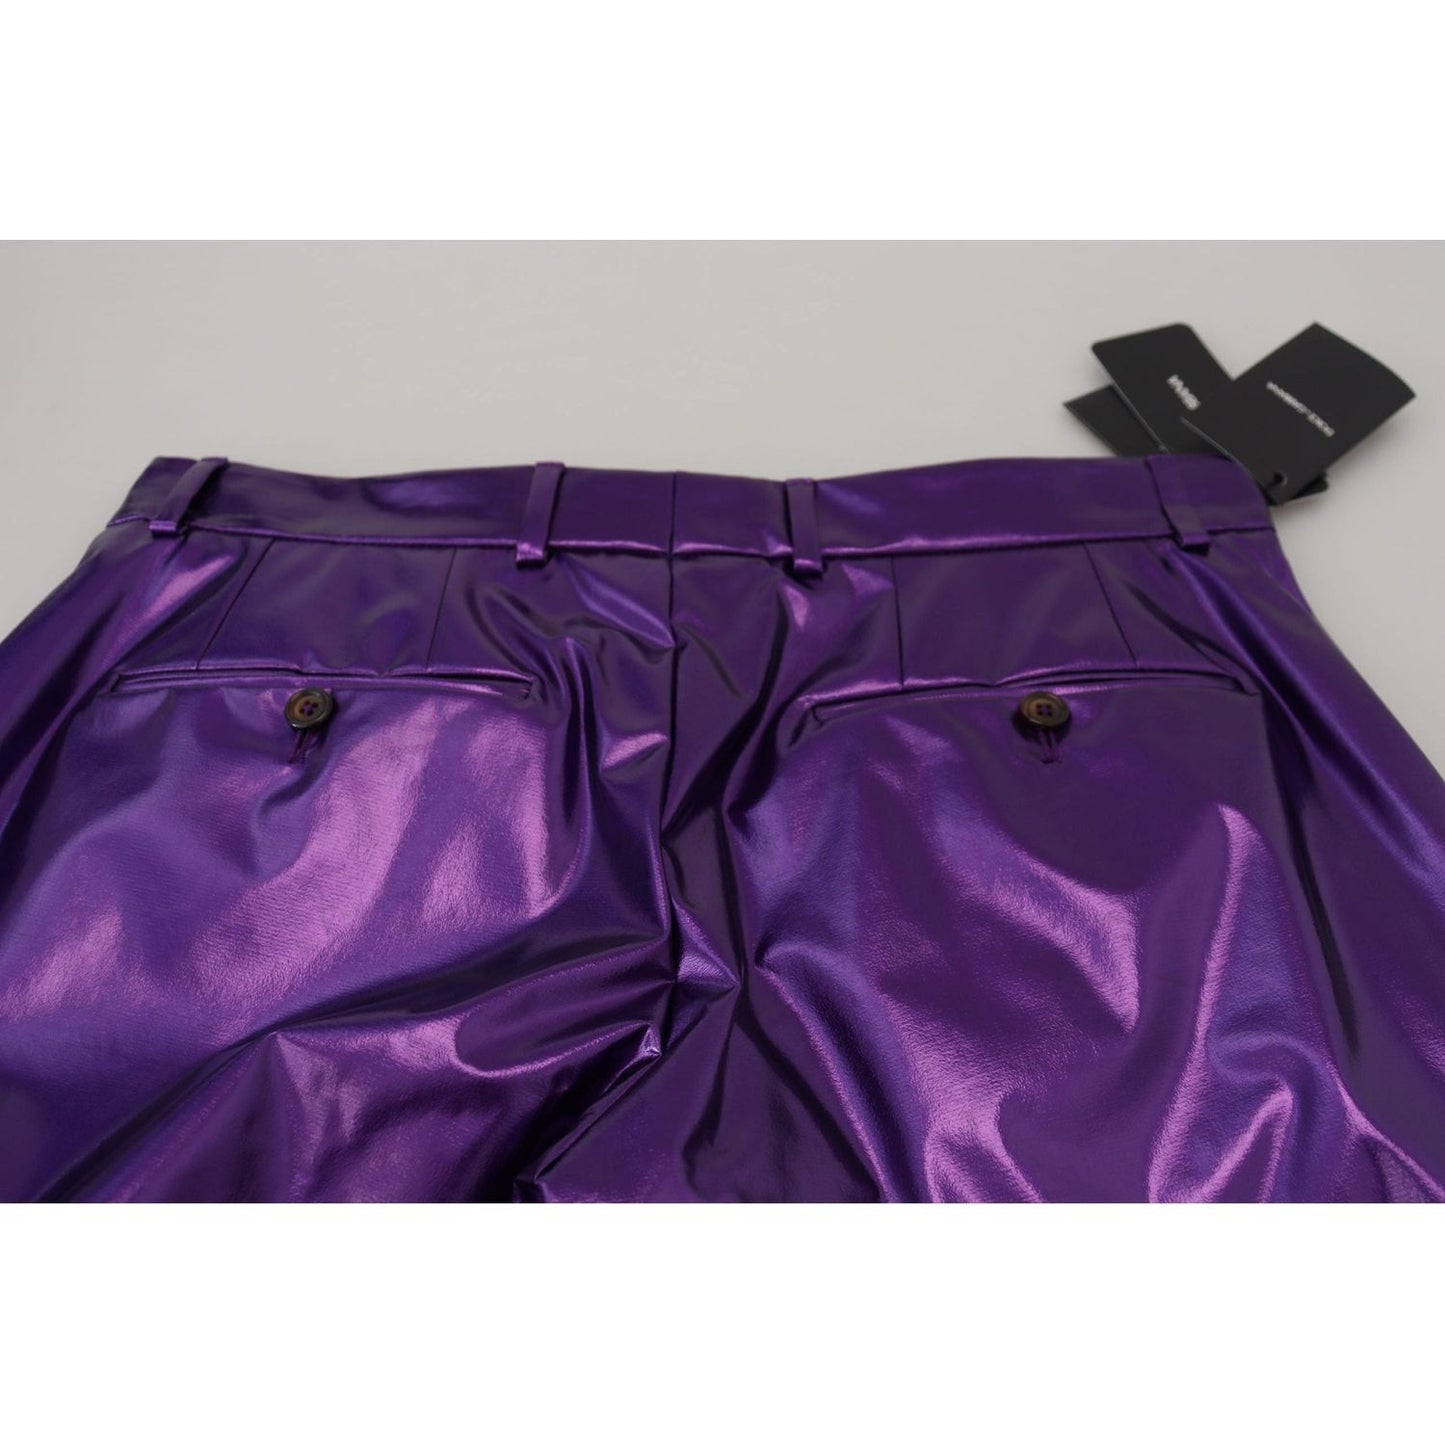 Dolce & Gabbana Elegant Shining Purple Straight Fit Pants purple-shining-men-casual-pants-1